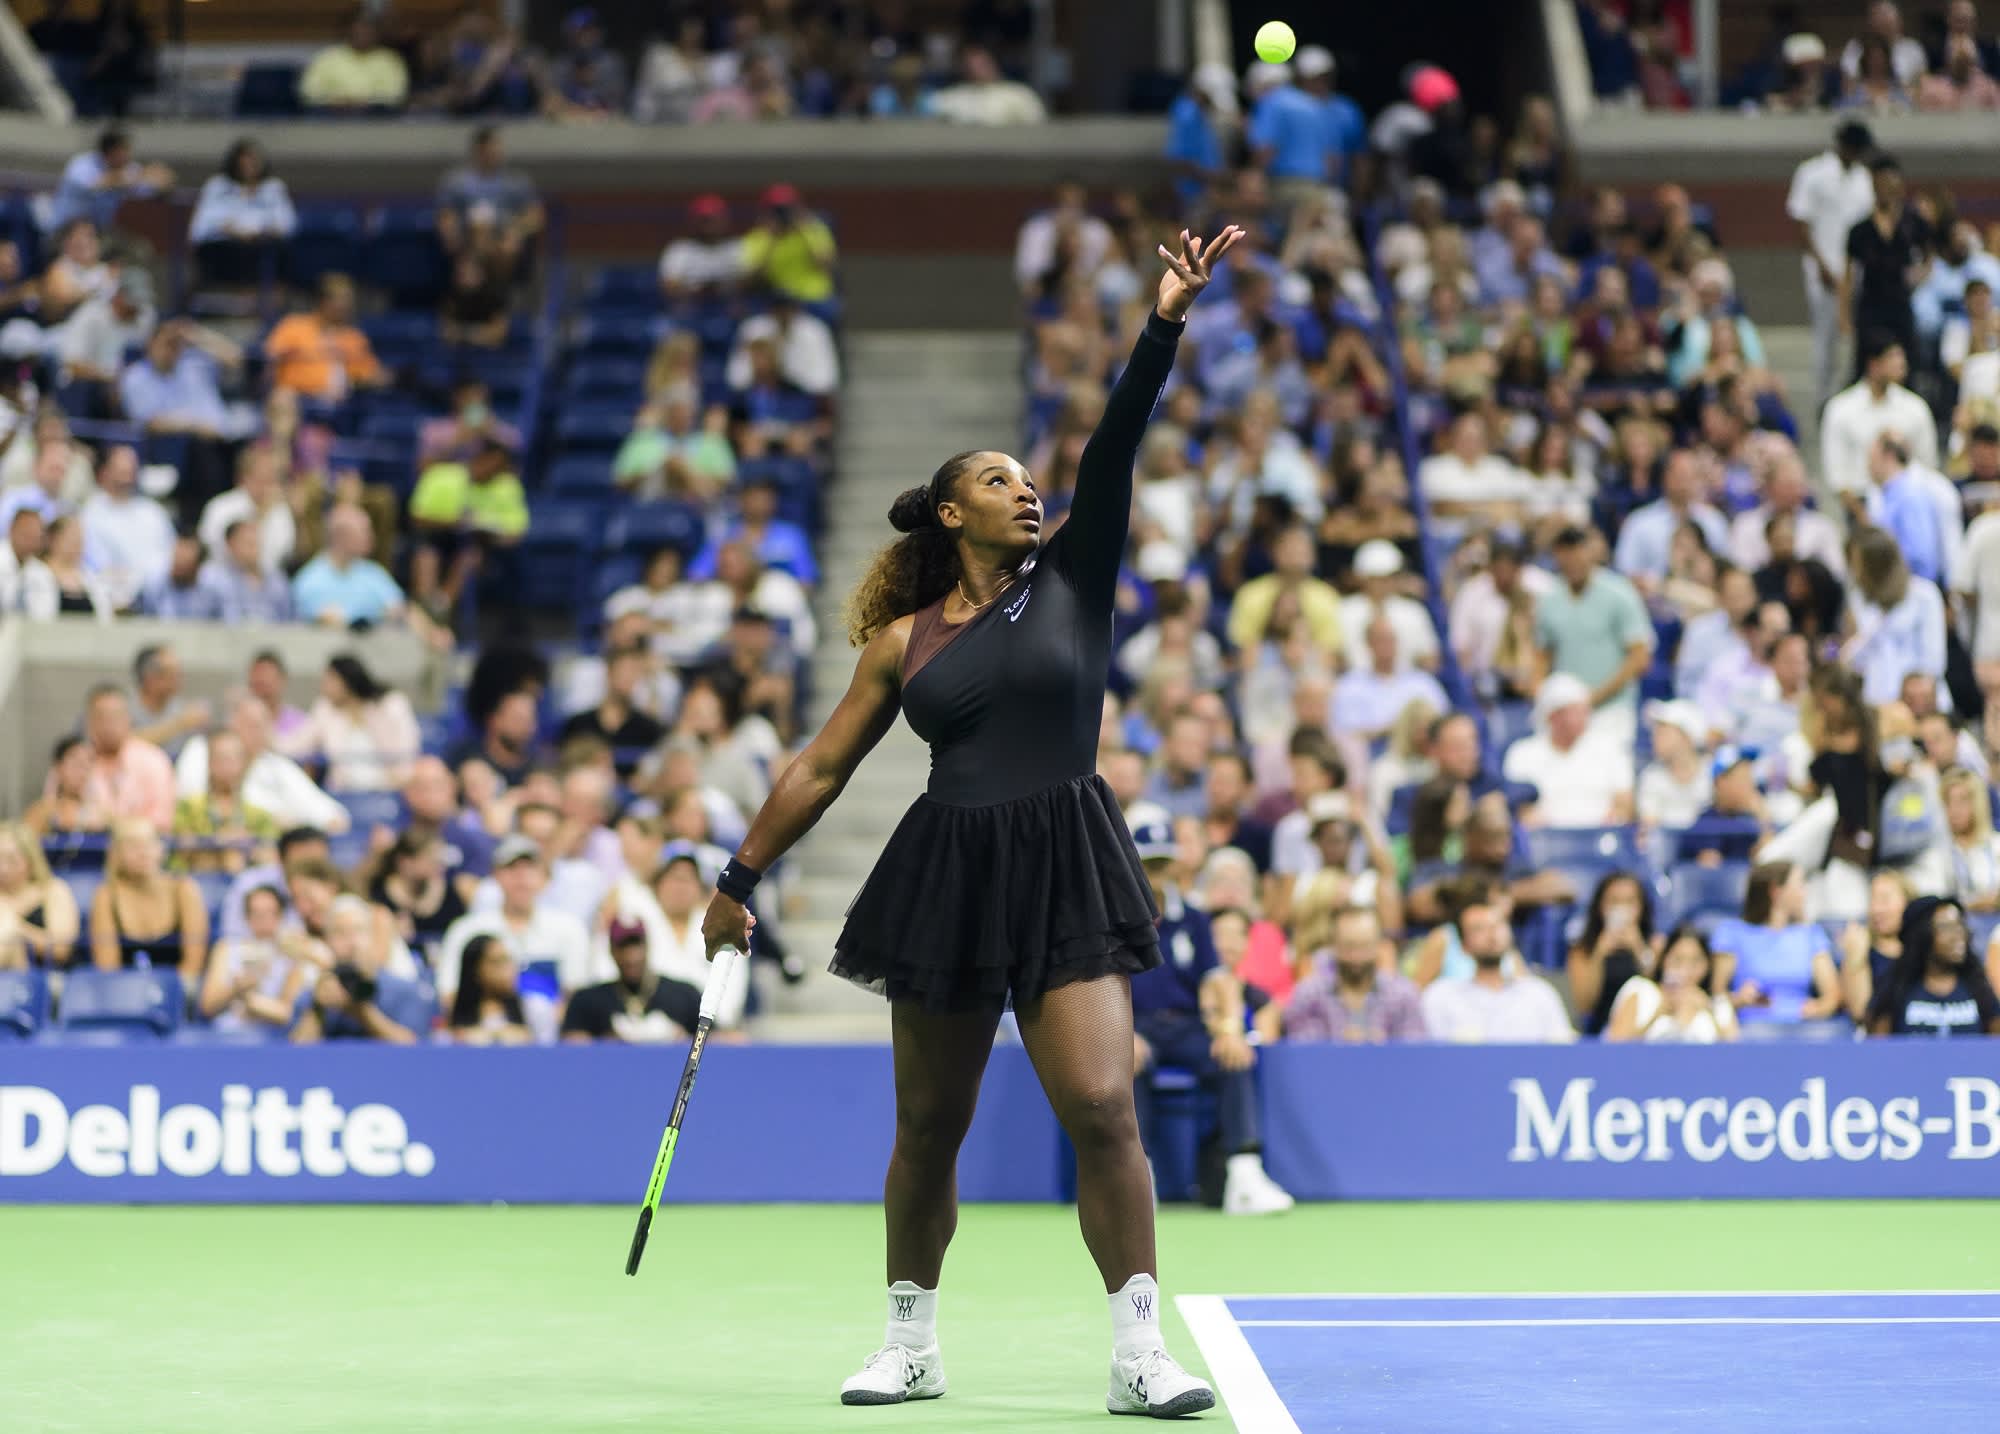 Serena Williams' Nike tutu cost